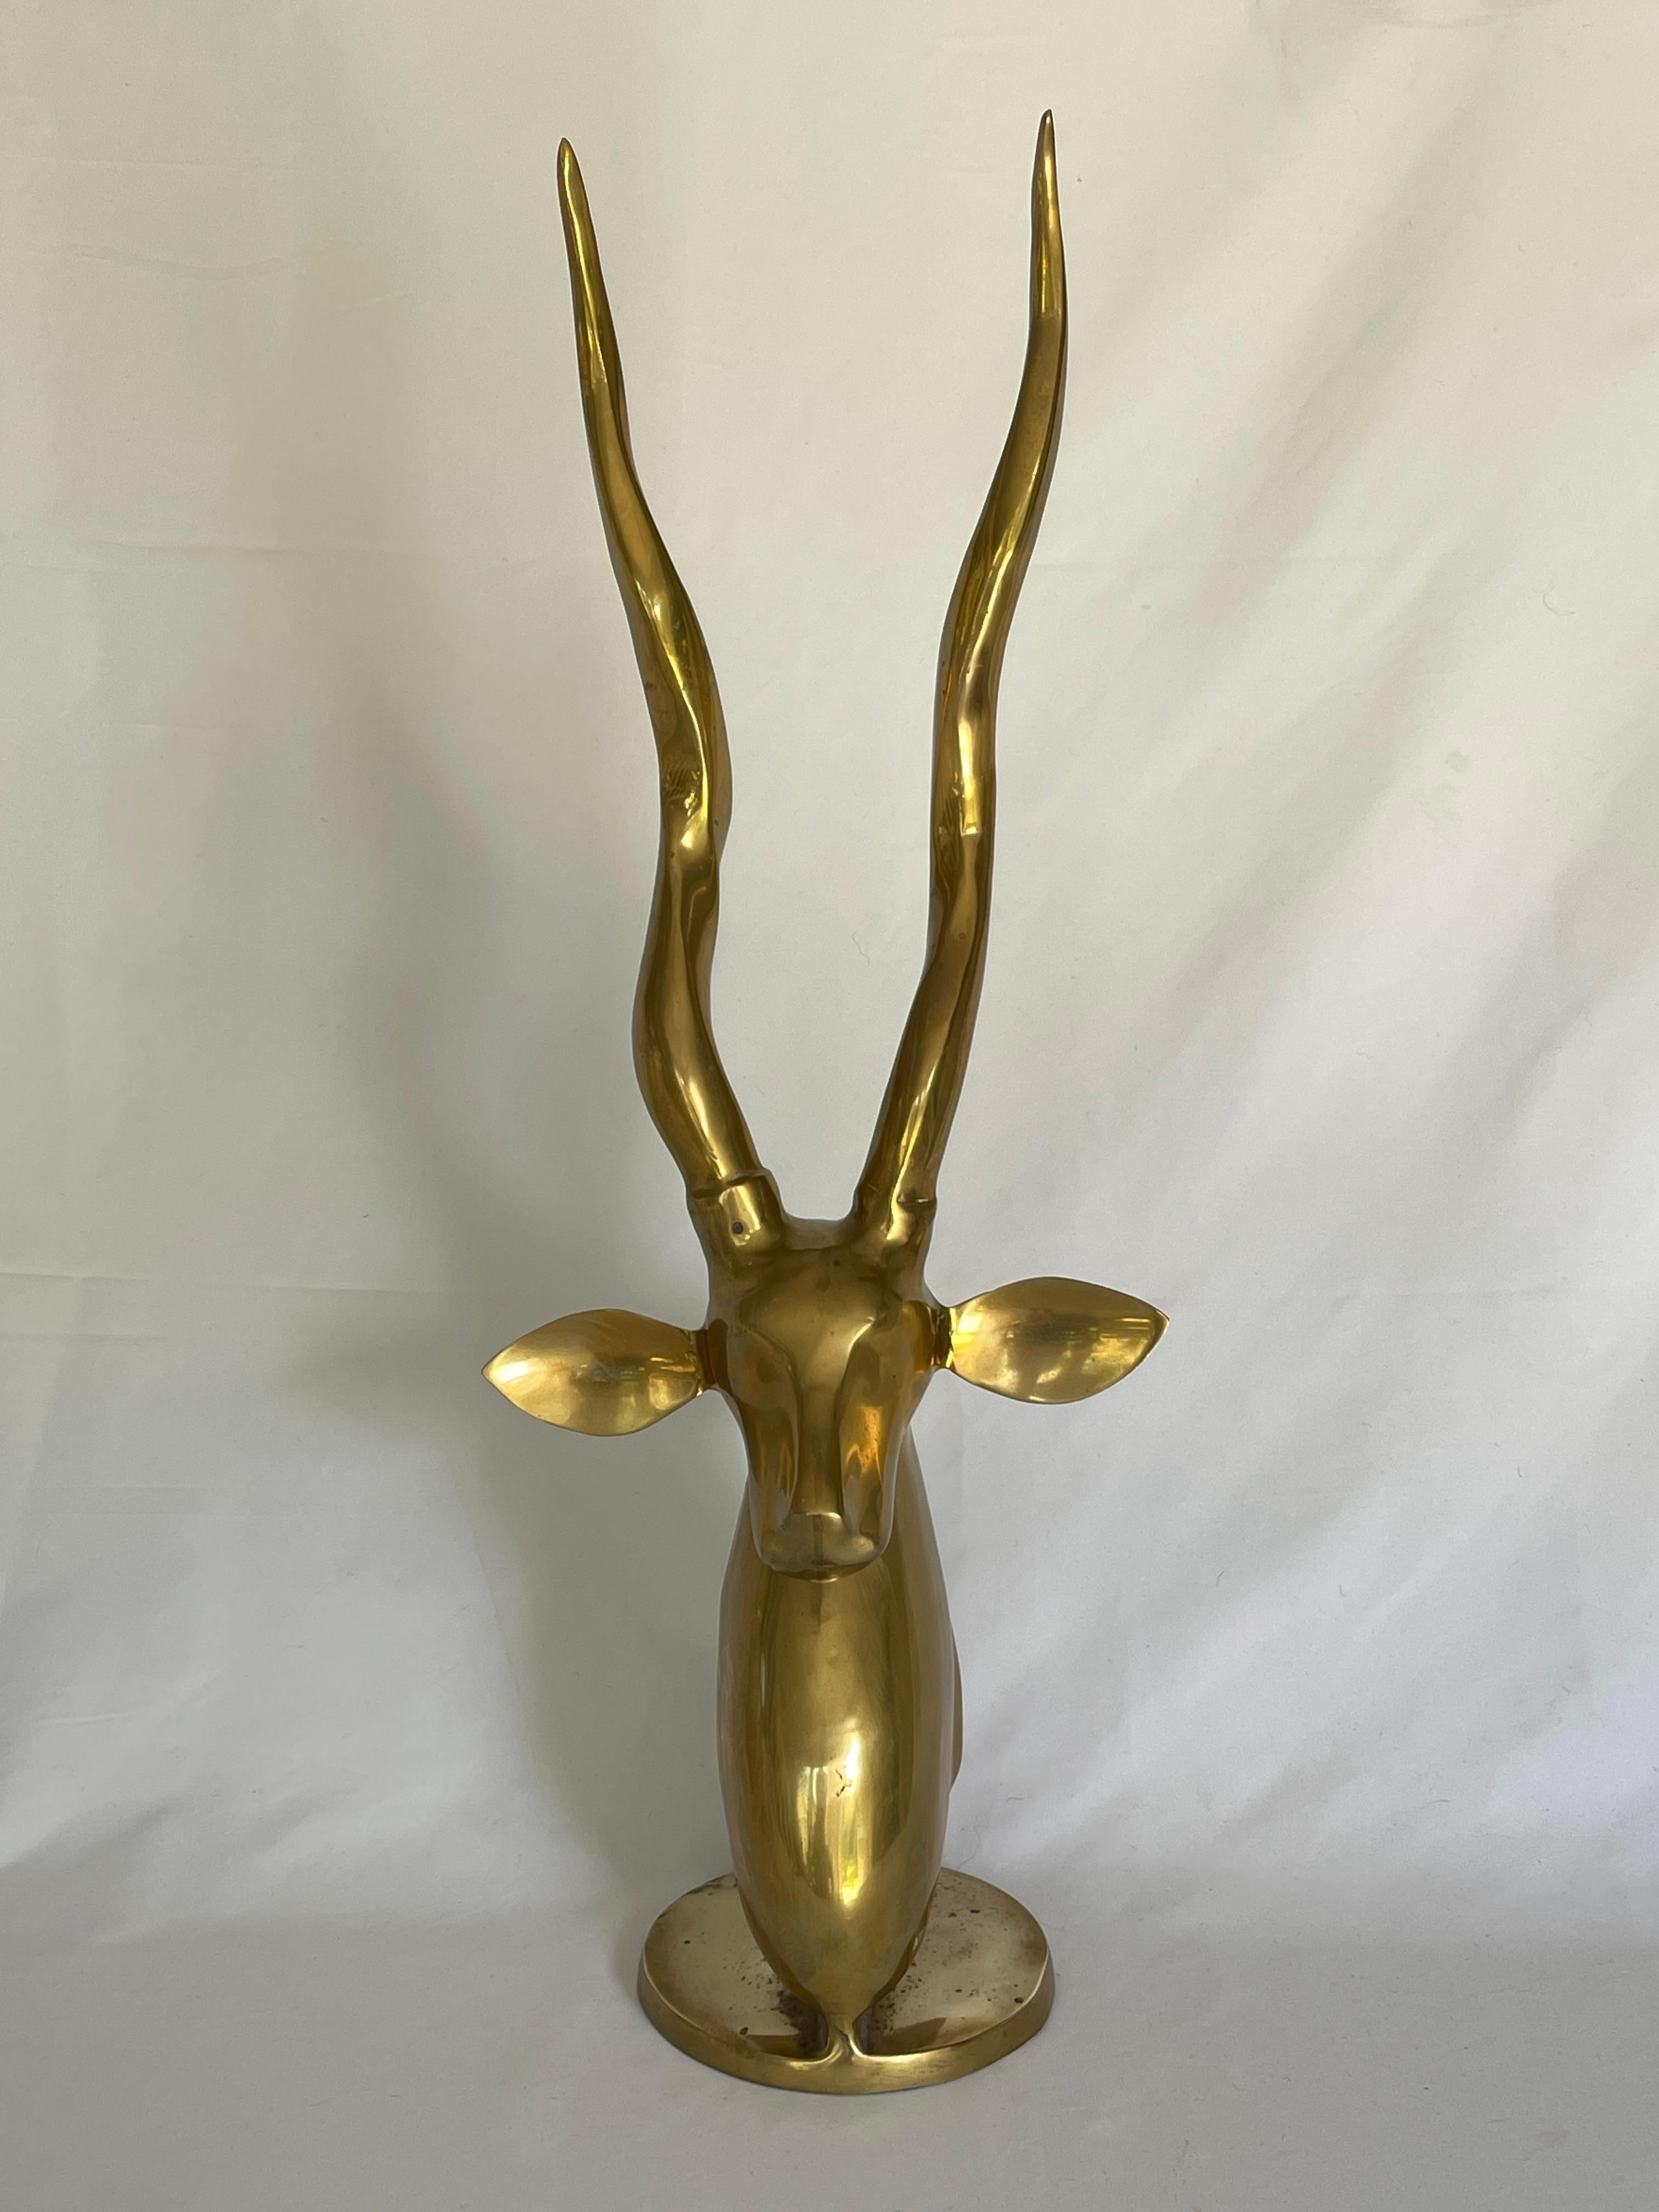 Roberto Estevez  1980's tall polished solid brass kudu sculpture with circular pedestal base.
 
